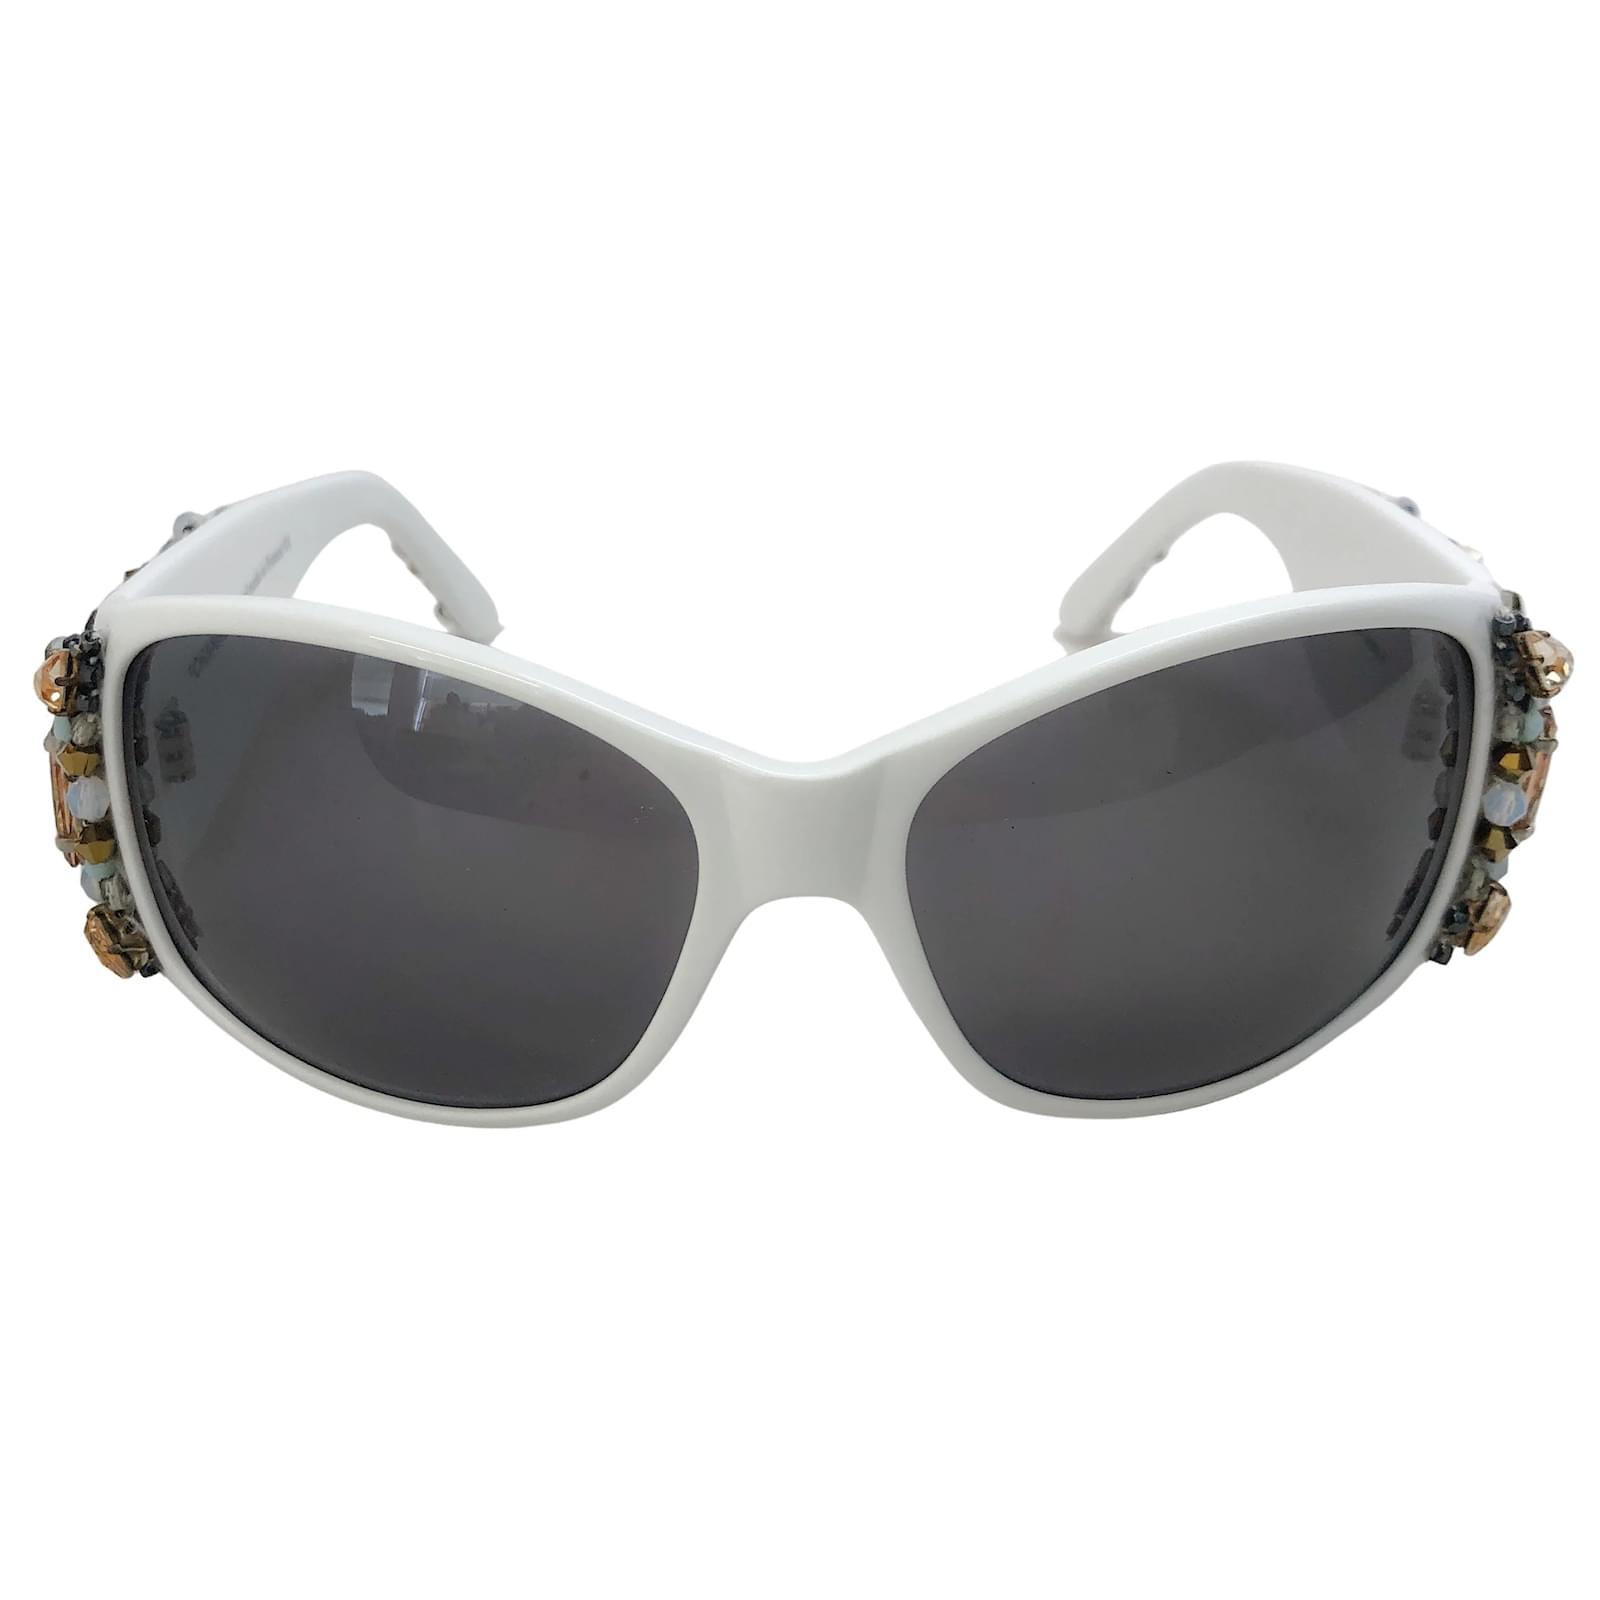 Sunglasses Chanel Chanel White Crystal Bijou Numero 1 Sunglasses